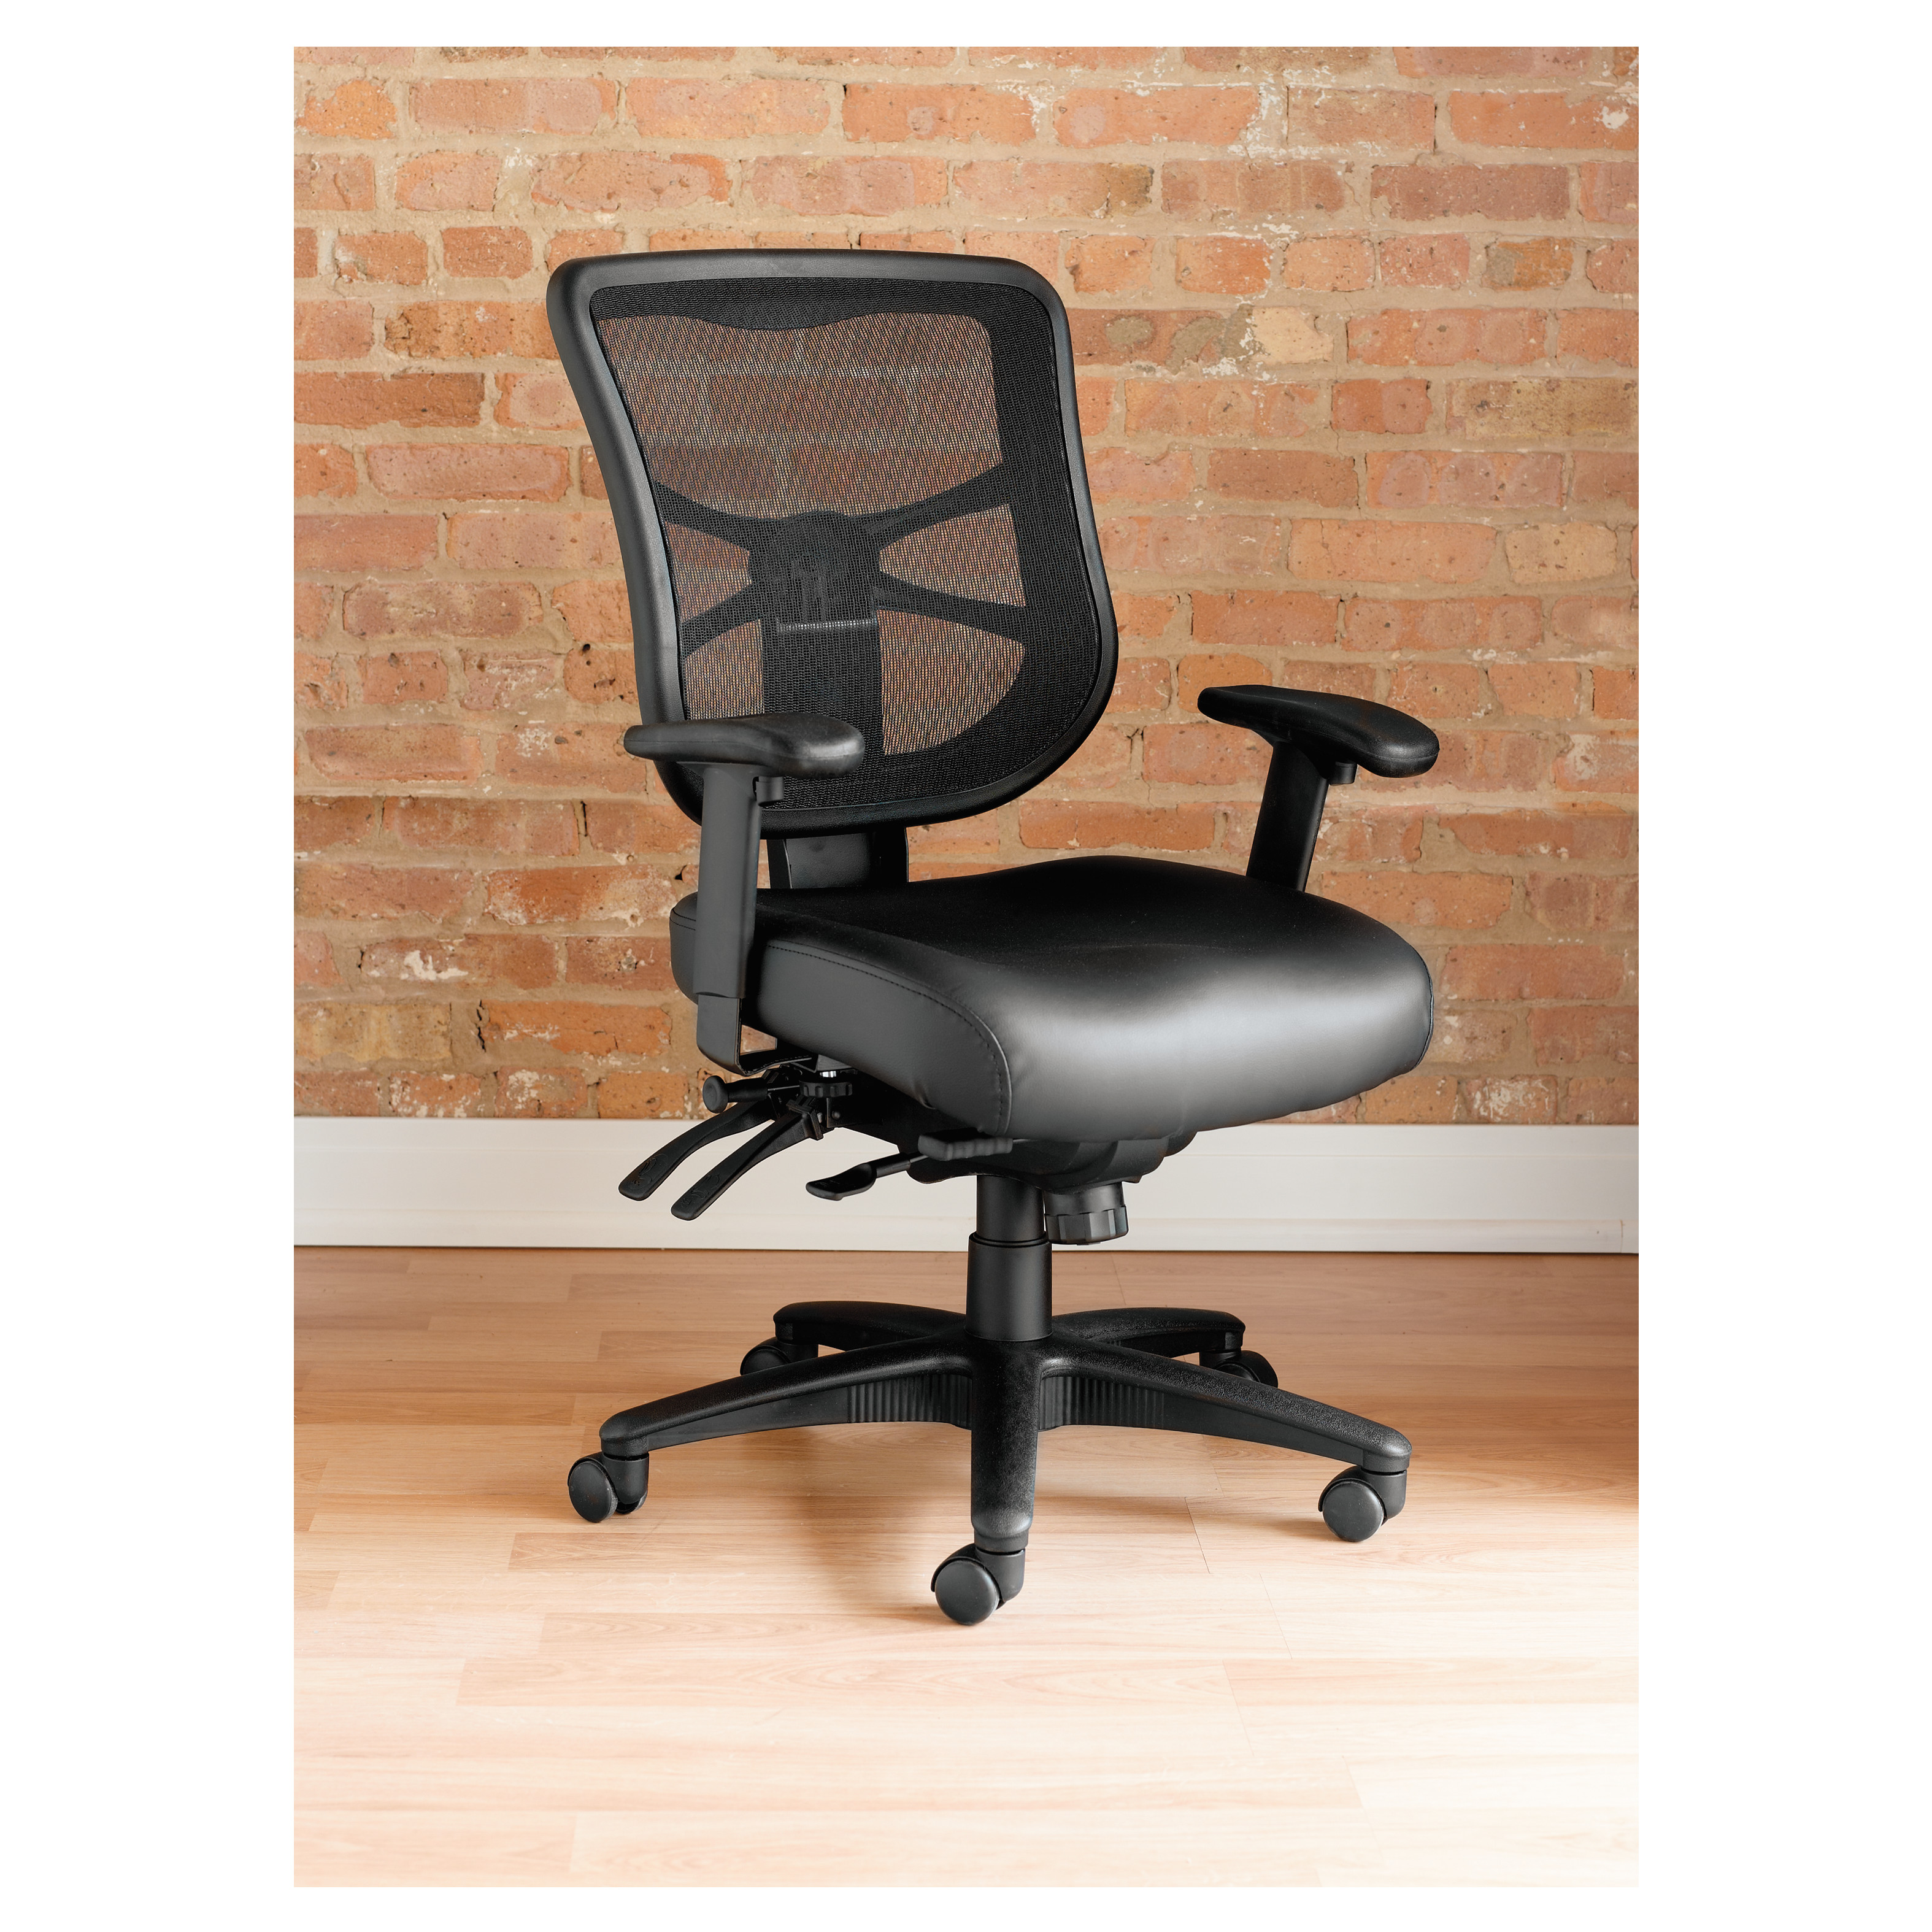  Alera ALEEL4215 Alera Elusion Series Mesh Mid-Back Multifunction Chair, Supports up to 275 lbs., Black Seat/Black Back, Black Base (ALEEL4215) 